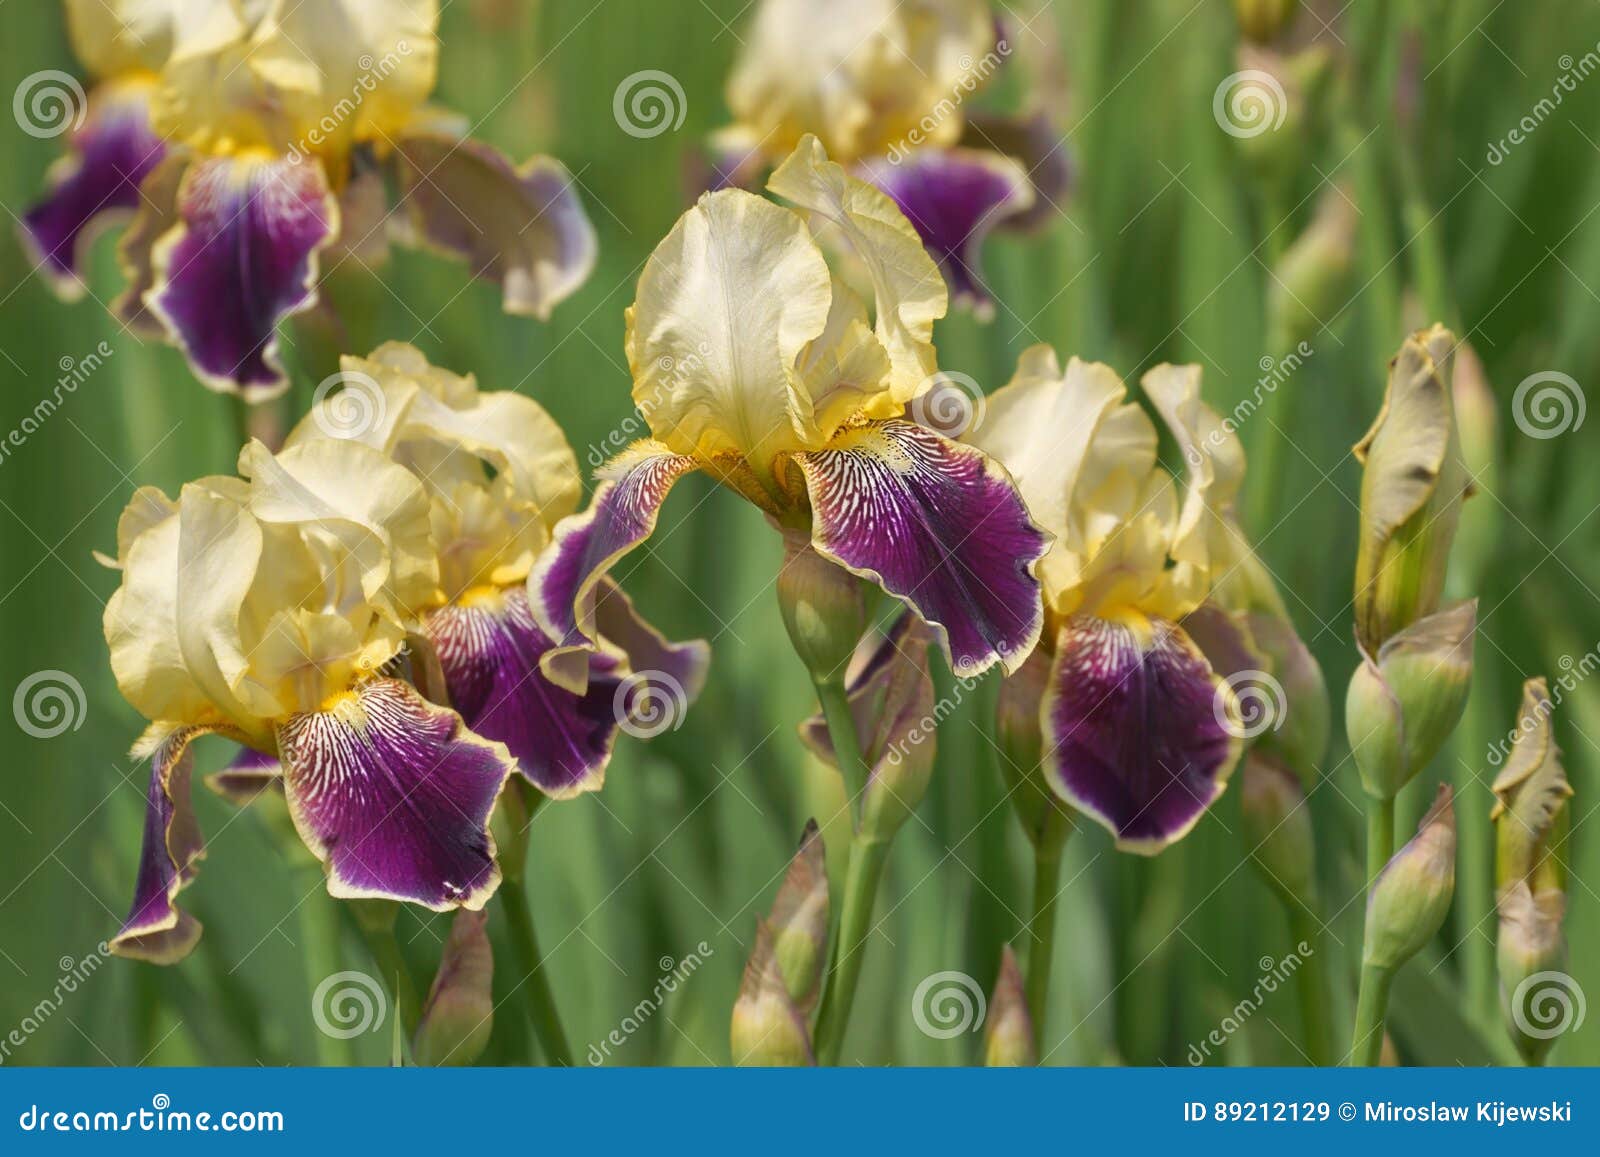 iris genial iris hybrida flowers in garden, spring